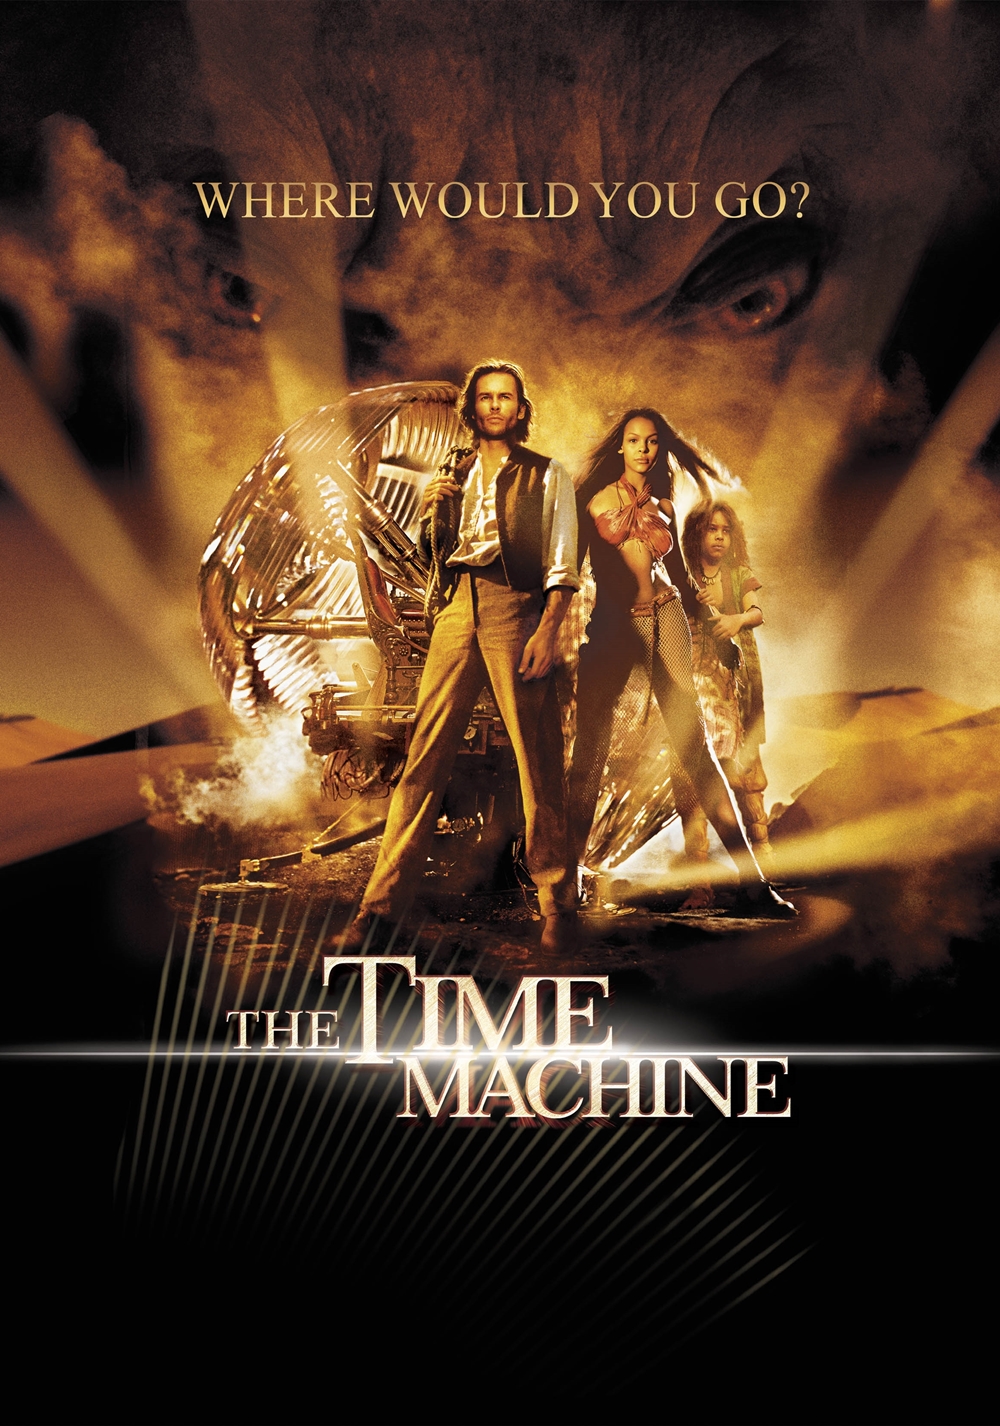 Stiahni si HD Filmy Stroj casu/ The Time Machine (2002)(CZ/EN)[Remux] = CSFD 58%